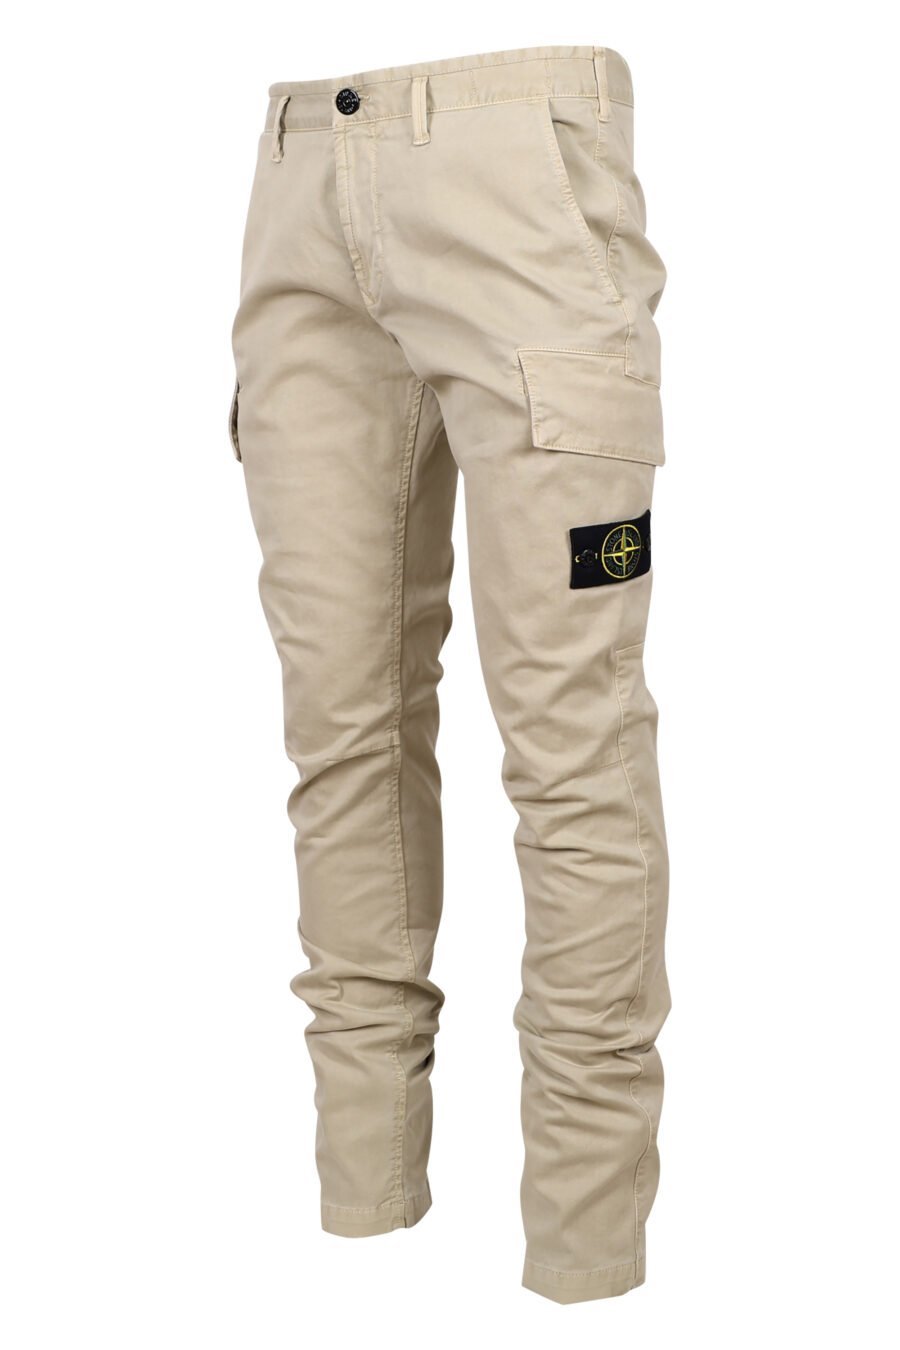 Stone Island - Pantalón beige cargo con logo parche lateral - BLS Fashion